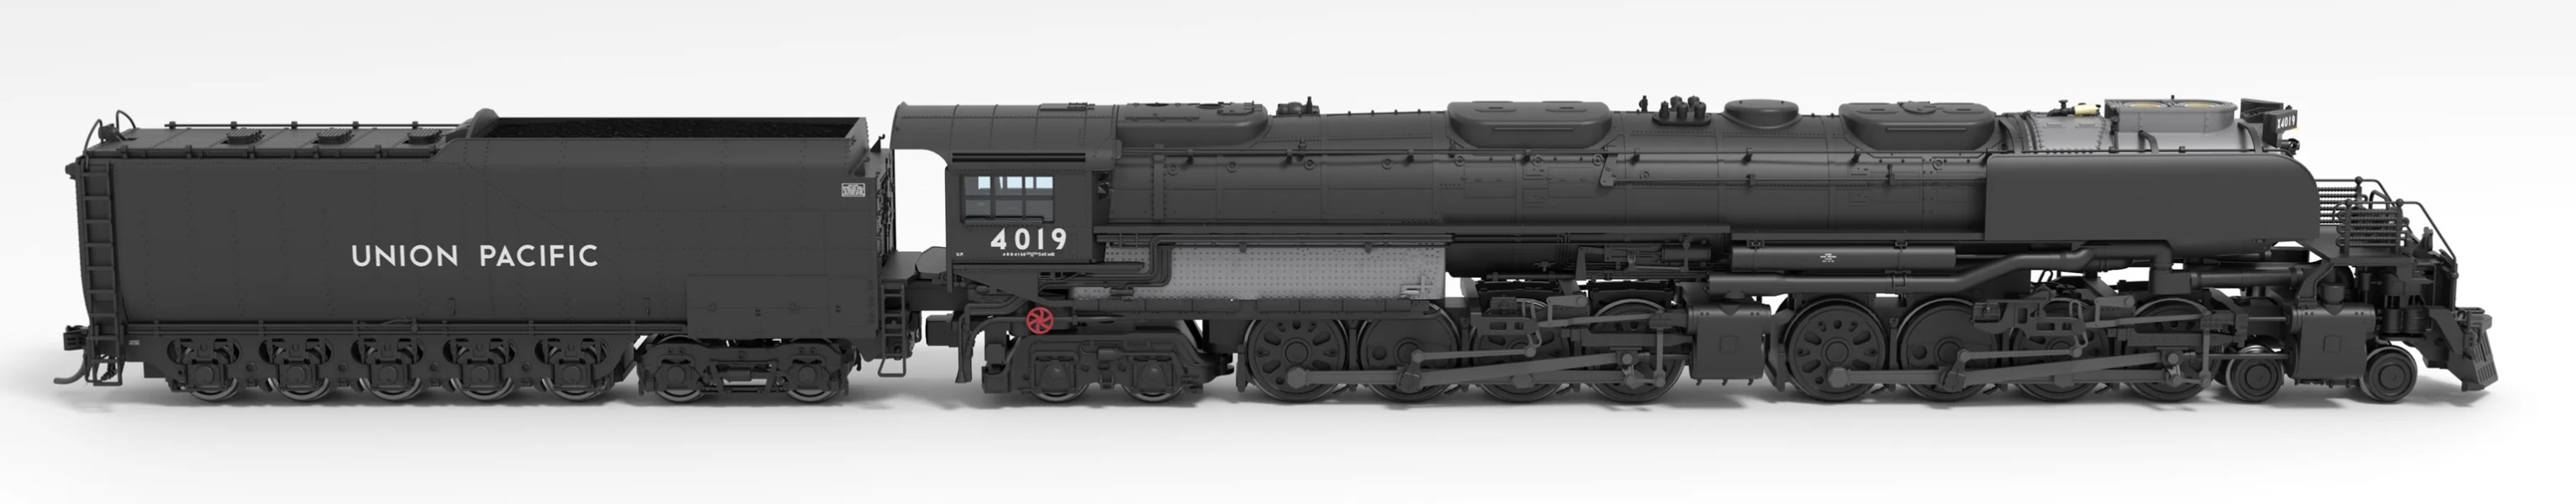 N Scale - Broadway Limited - 8997 - Locomotive, Steam, 4-8-8-4 Big Boy - Union Pacific - 4019